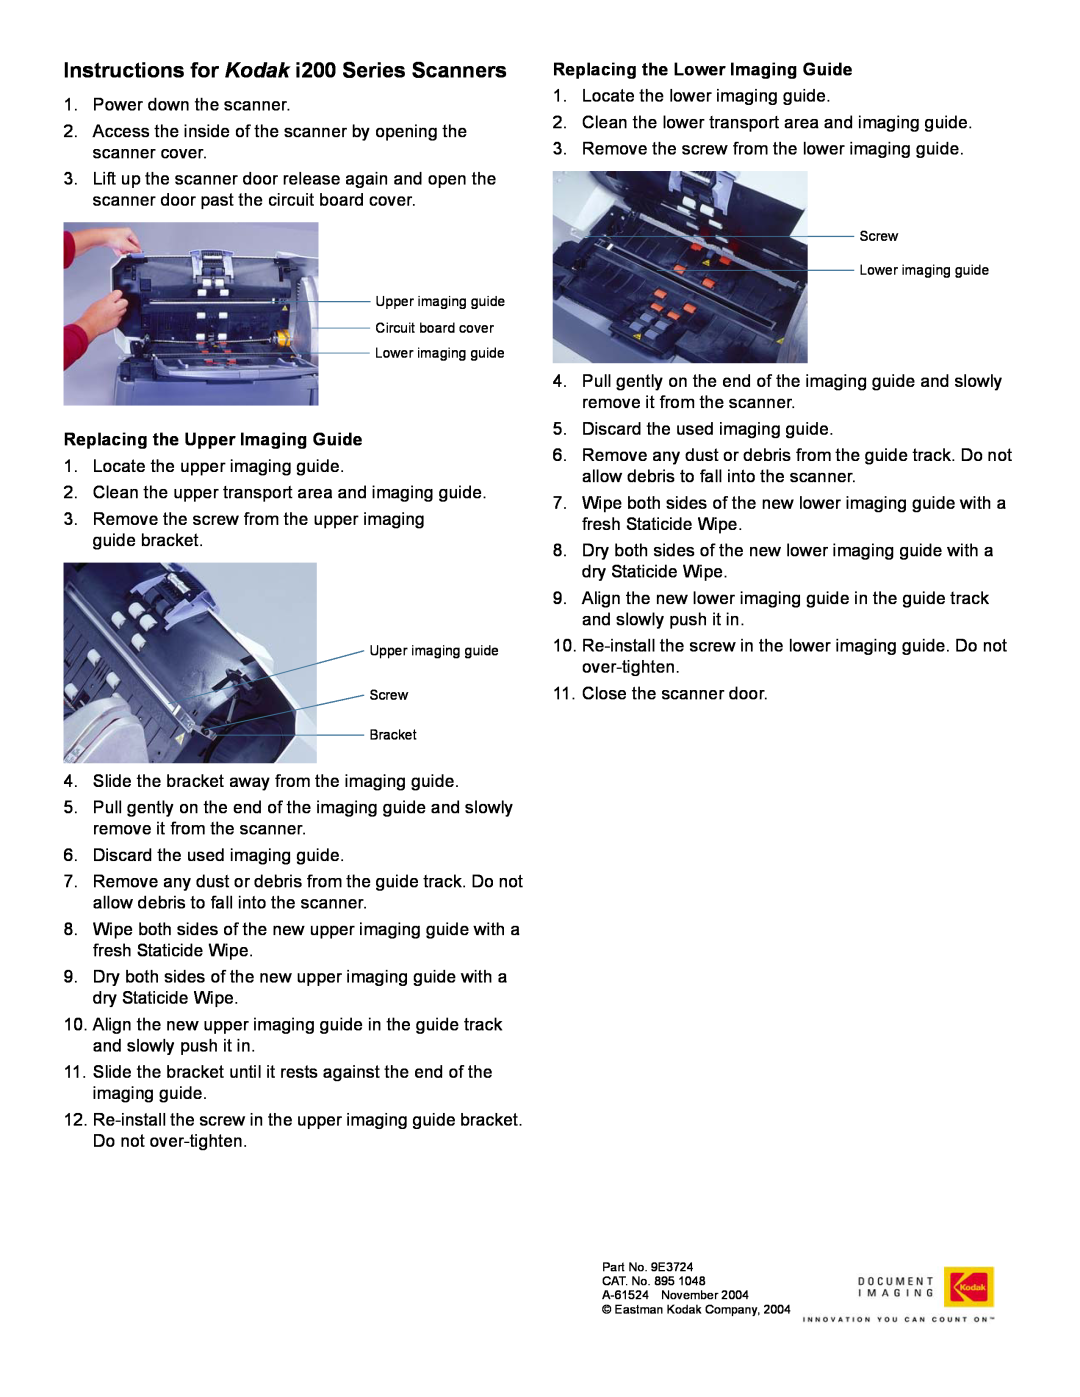 Kodak I200 manual Instructions for Kodak i200 Series Scanners, Replacing the Upper Imaging Guide 